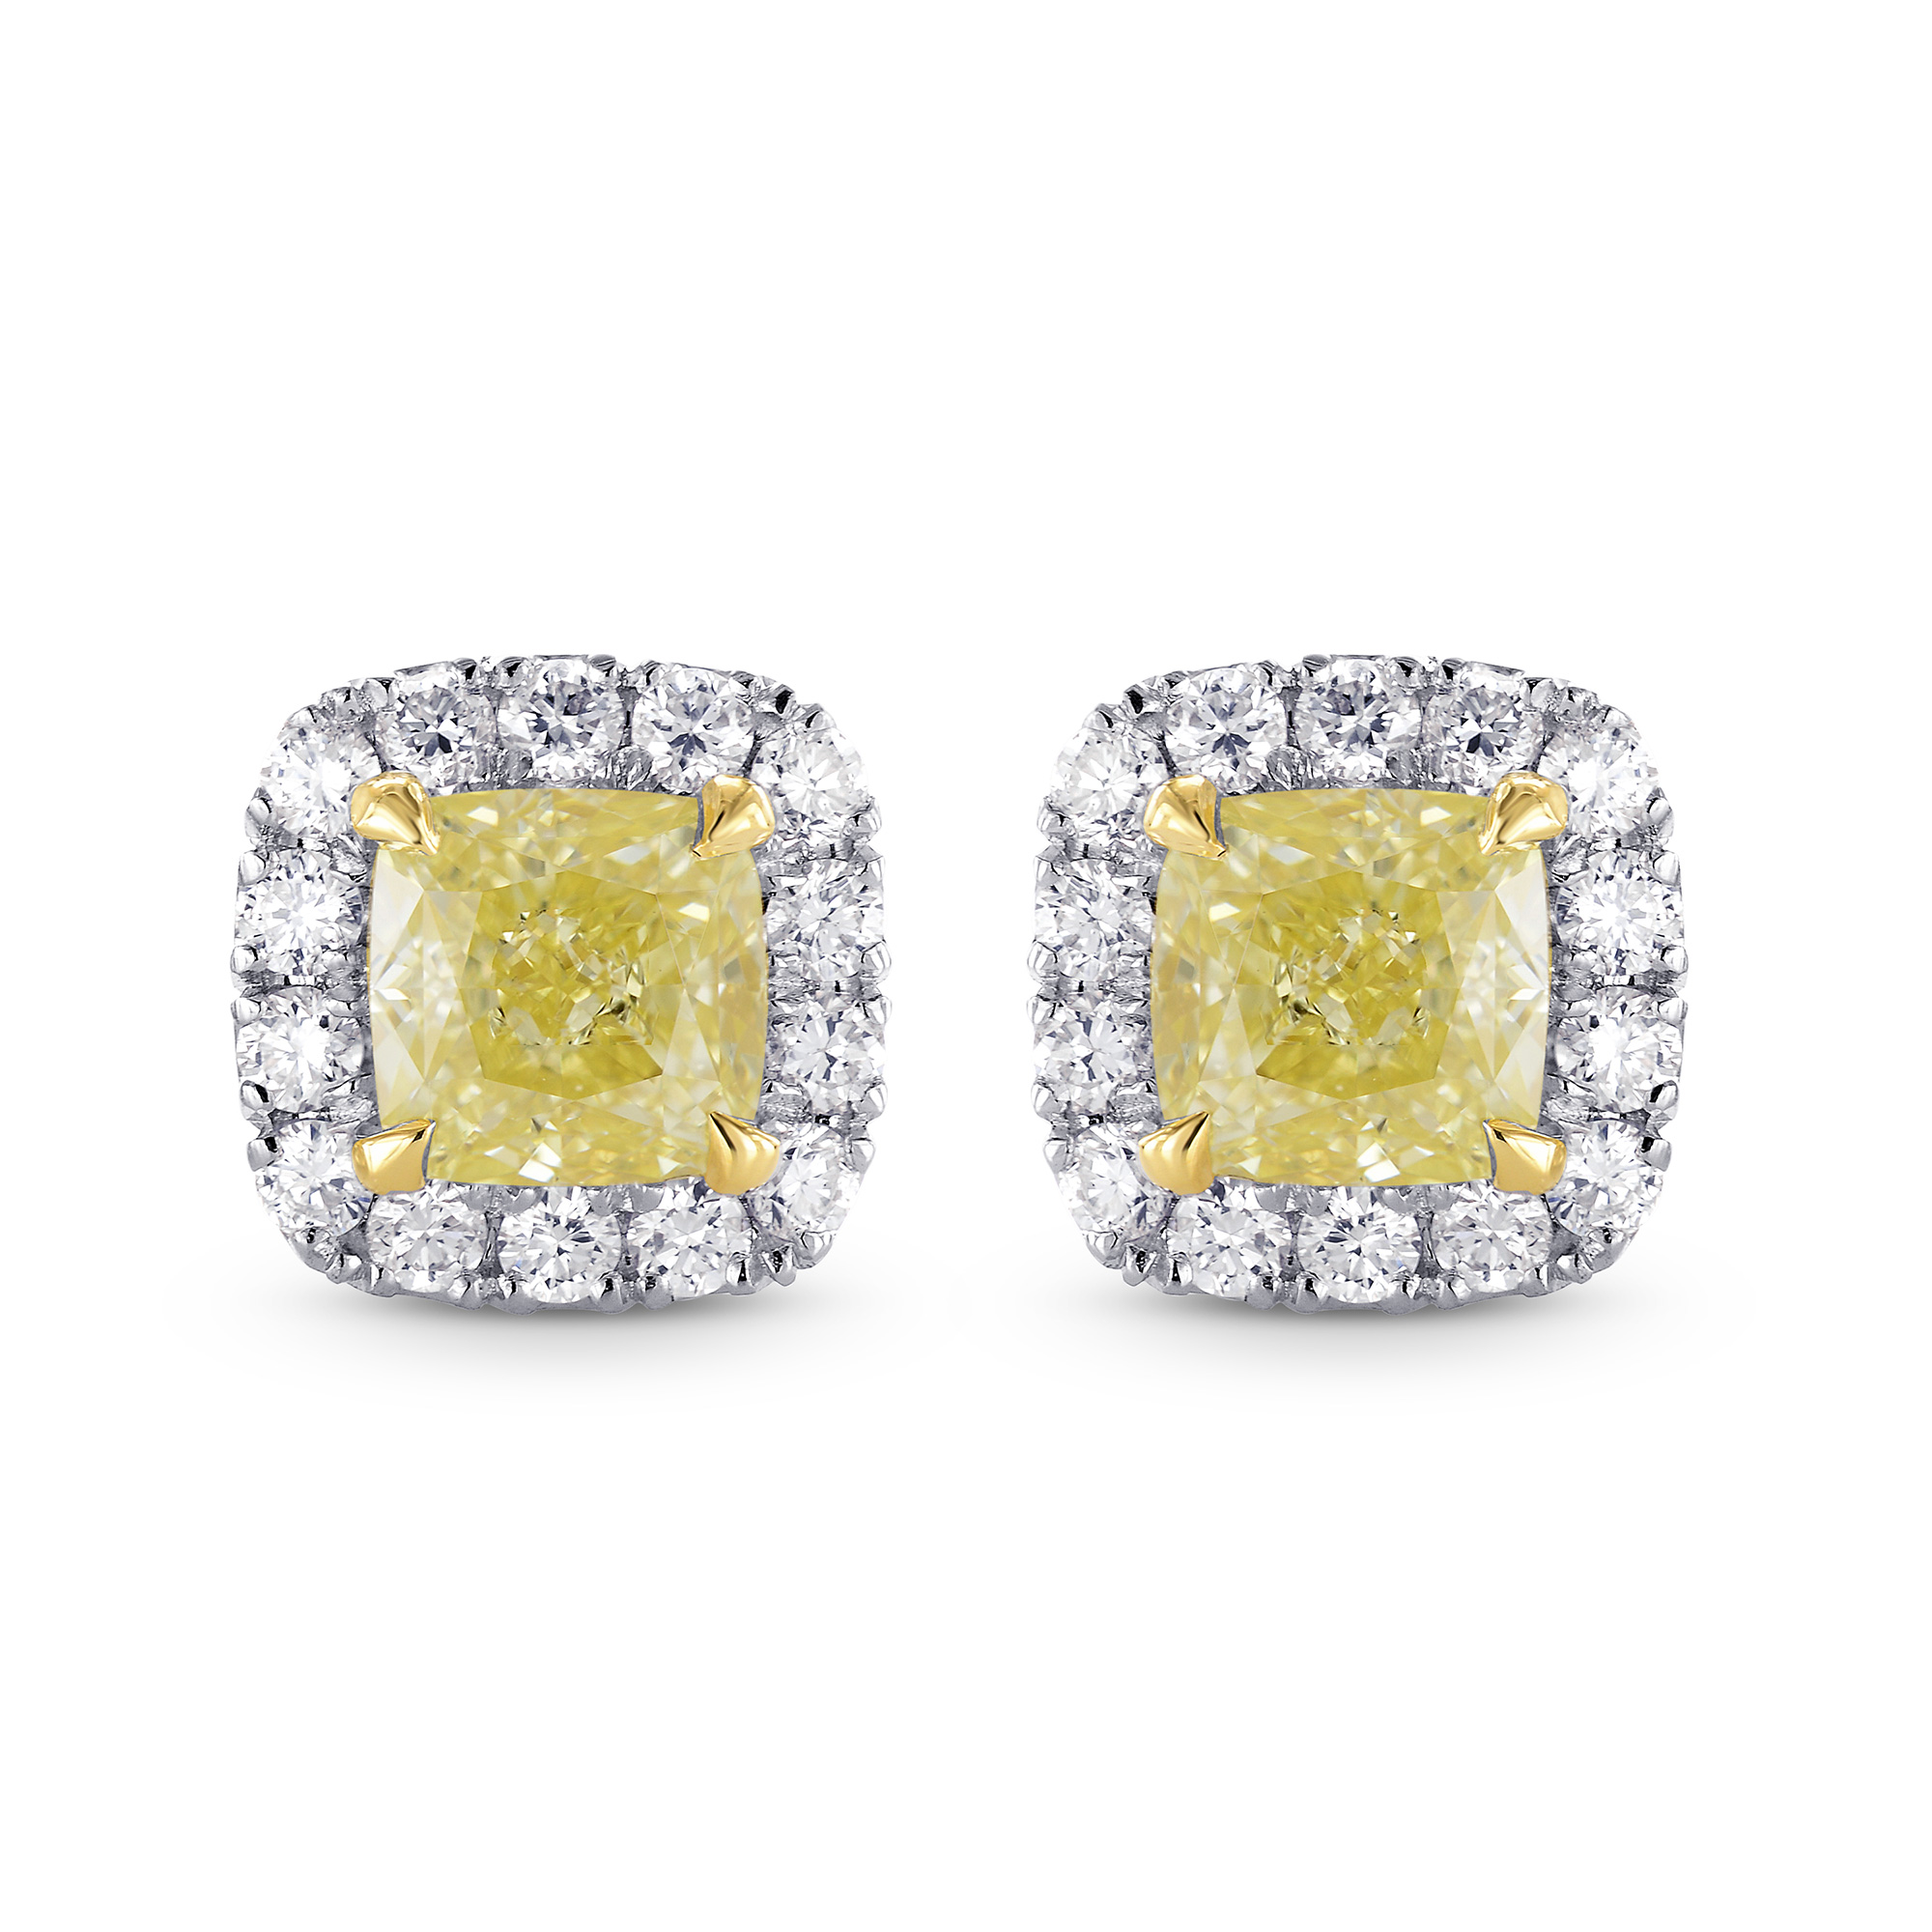  Fancy Yellow Cushion diamond Halo earrings, SKU 213587 (1.2Ct TW)